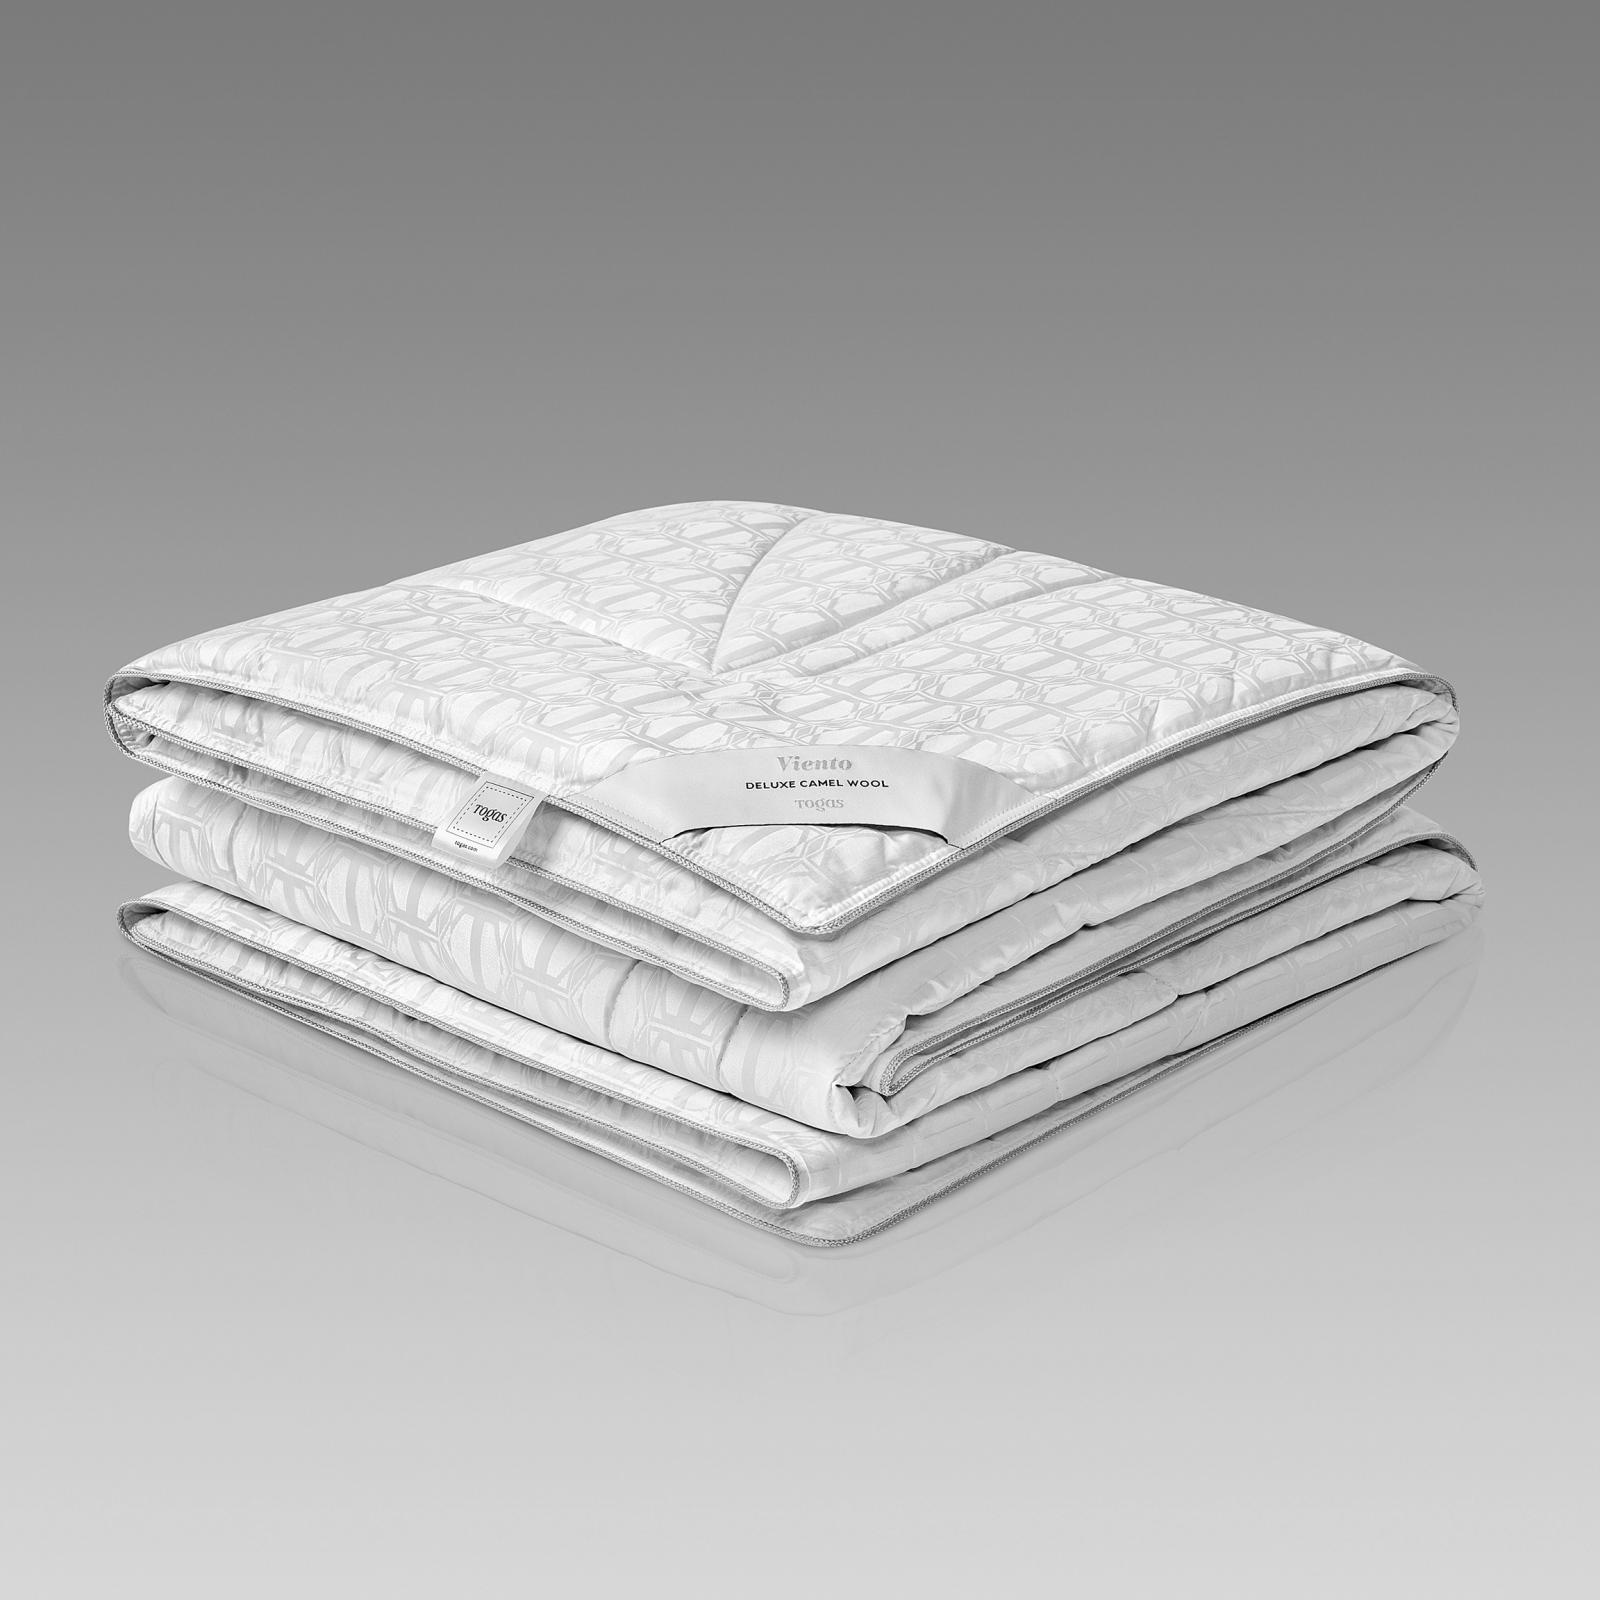 Одеяло Виенто Togas 200х210, размер 200х210 см - фото 4